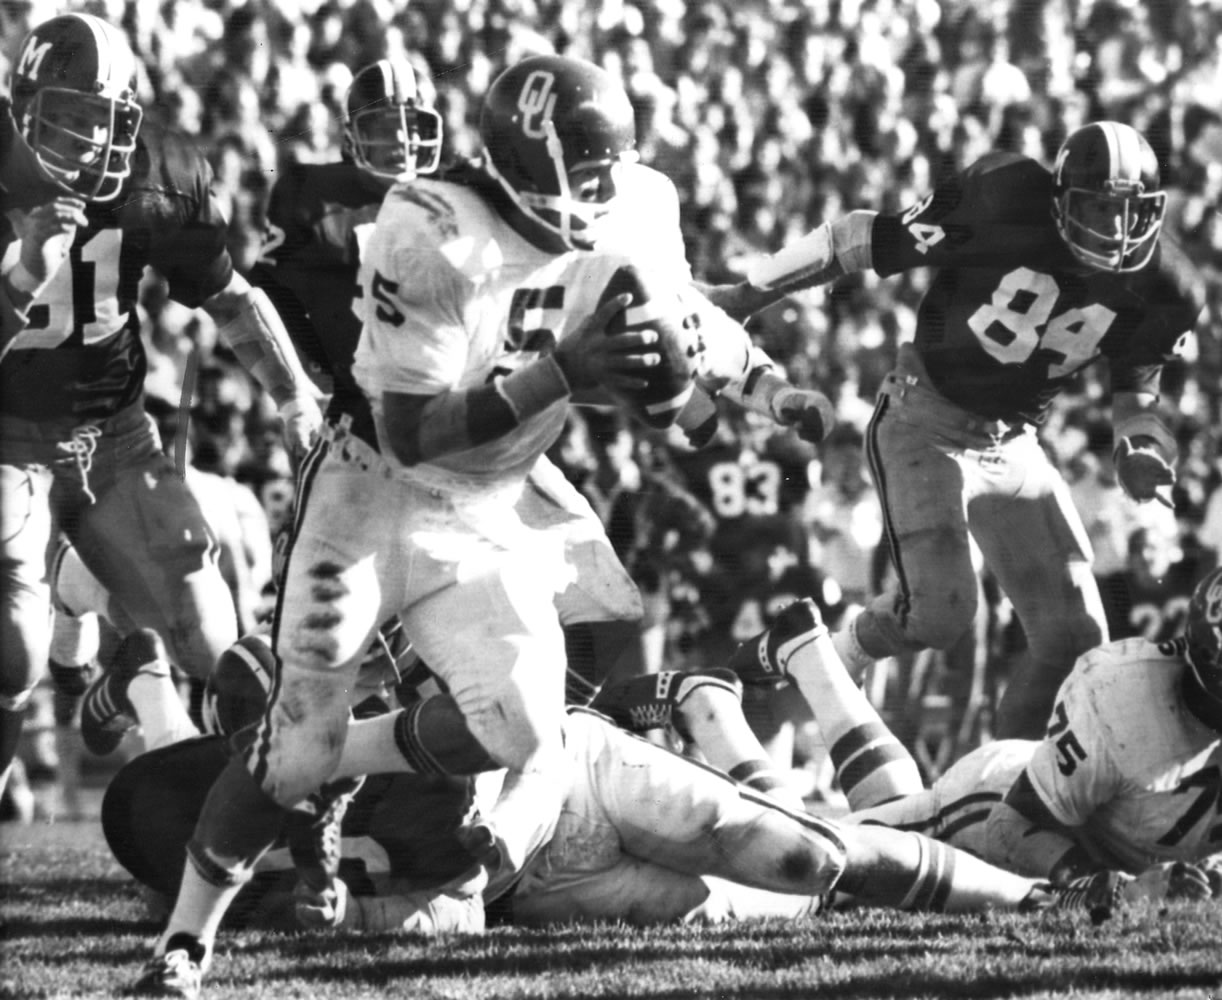 University of Oklahoma quarterback Steven Davis (5) sweeps for a 15-yard gain against Missouri in 1975 in Columbia, Mo.